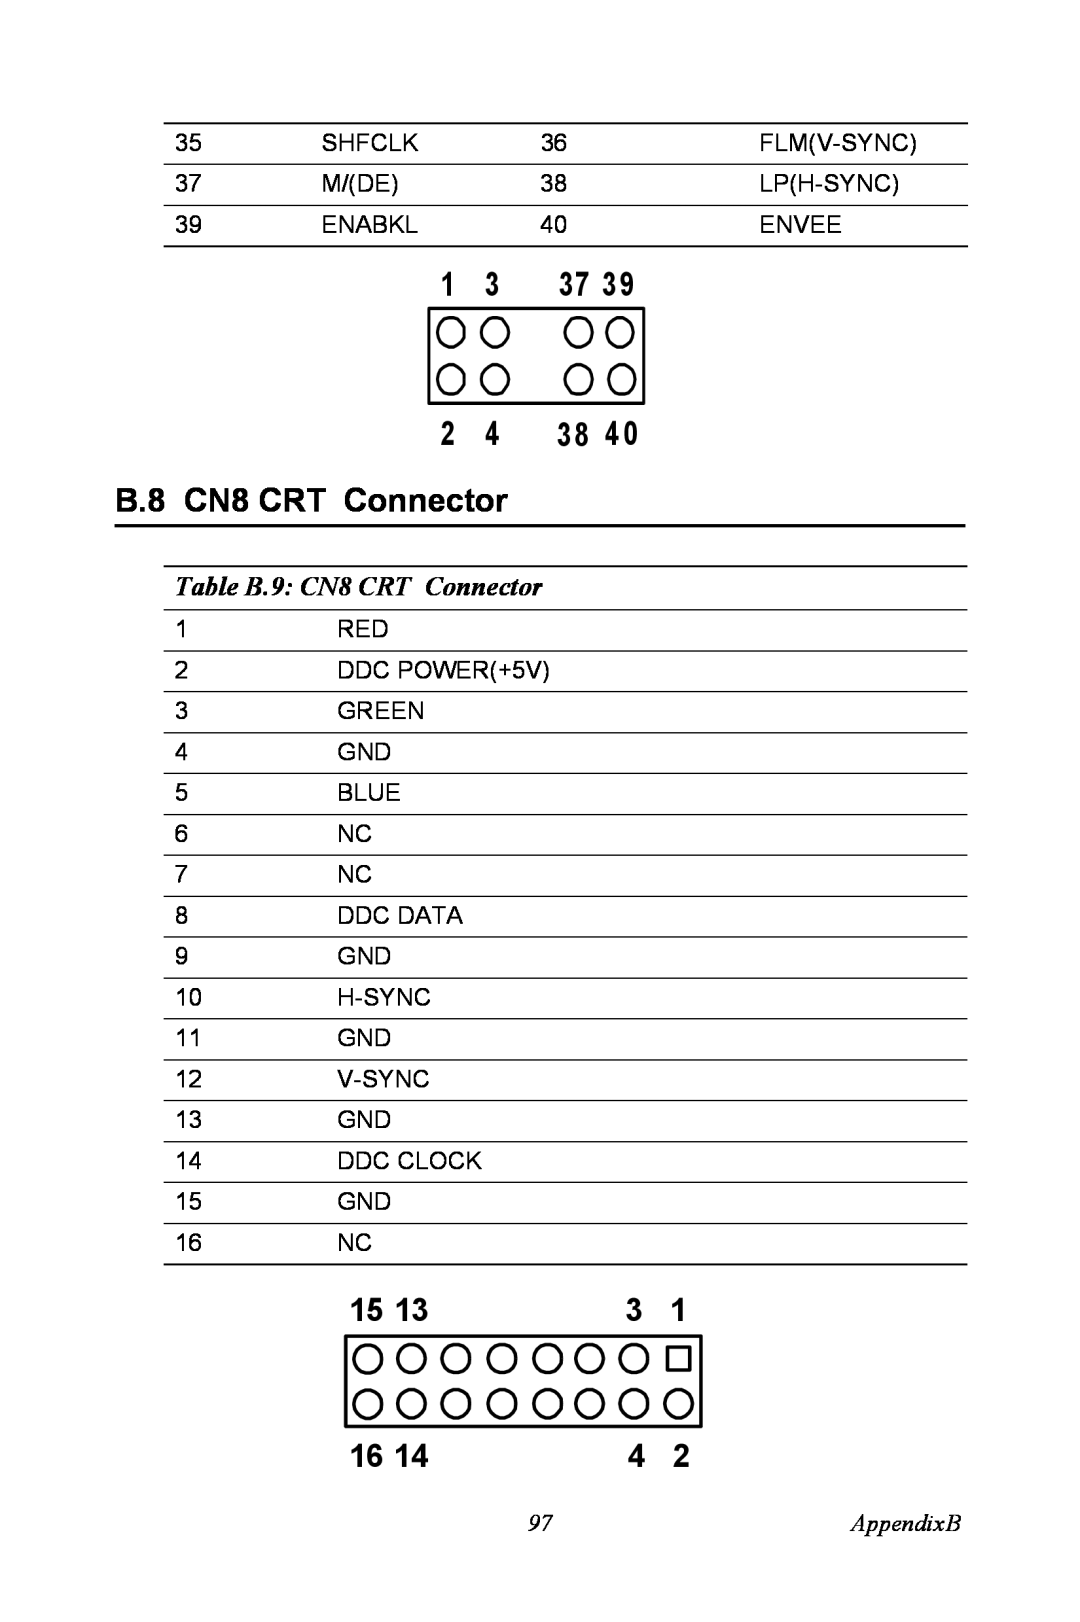 Intel PCM-3370 user manual B.8 CN8 CRT Connector, Table B.9 CN8 CRT Connector, AppendixB 